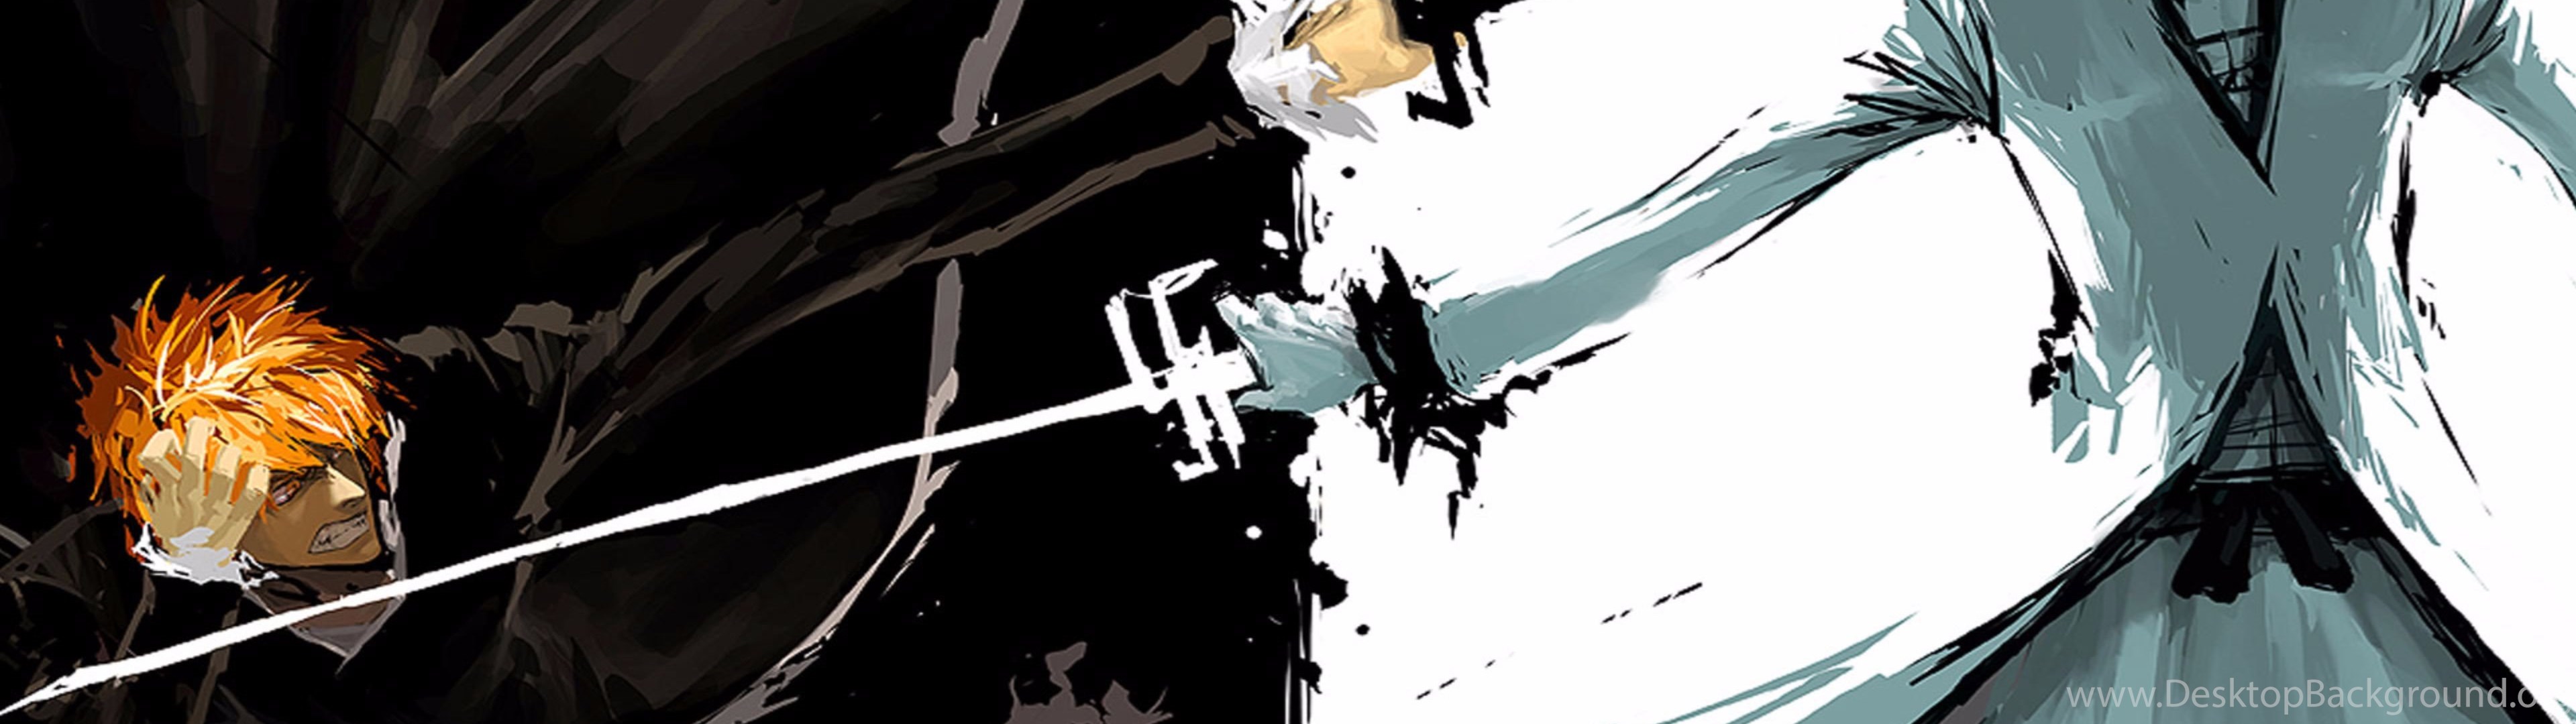 Black And White 2021 4K  Anime  Wallpapers  Desktop Background